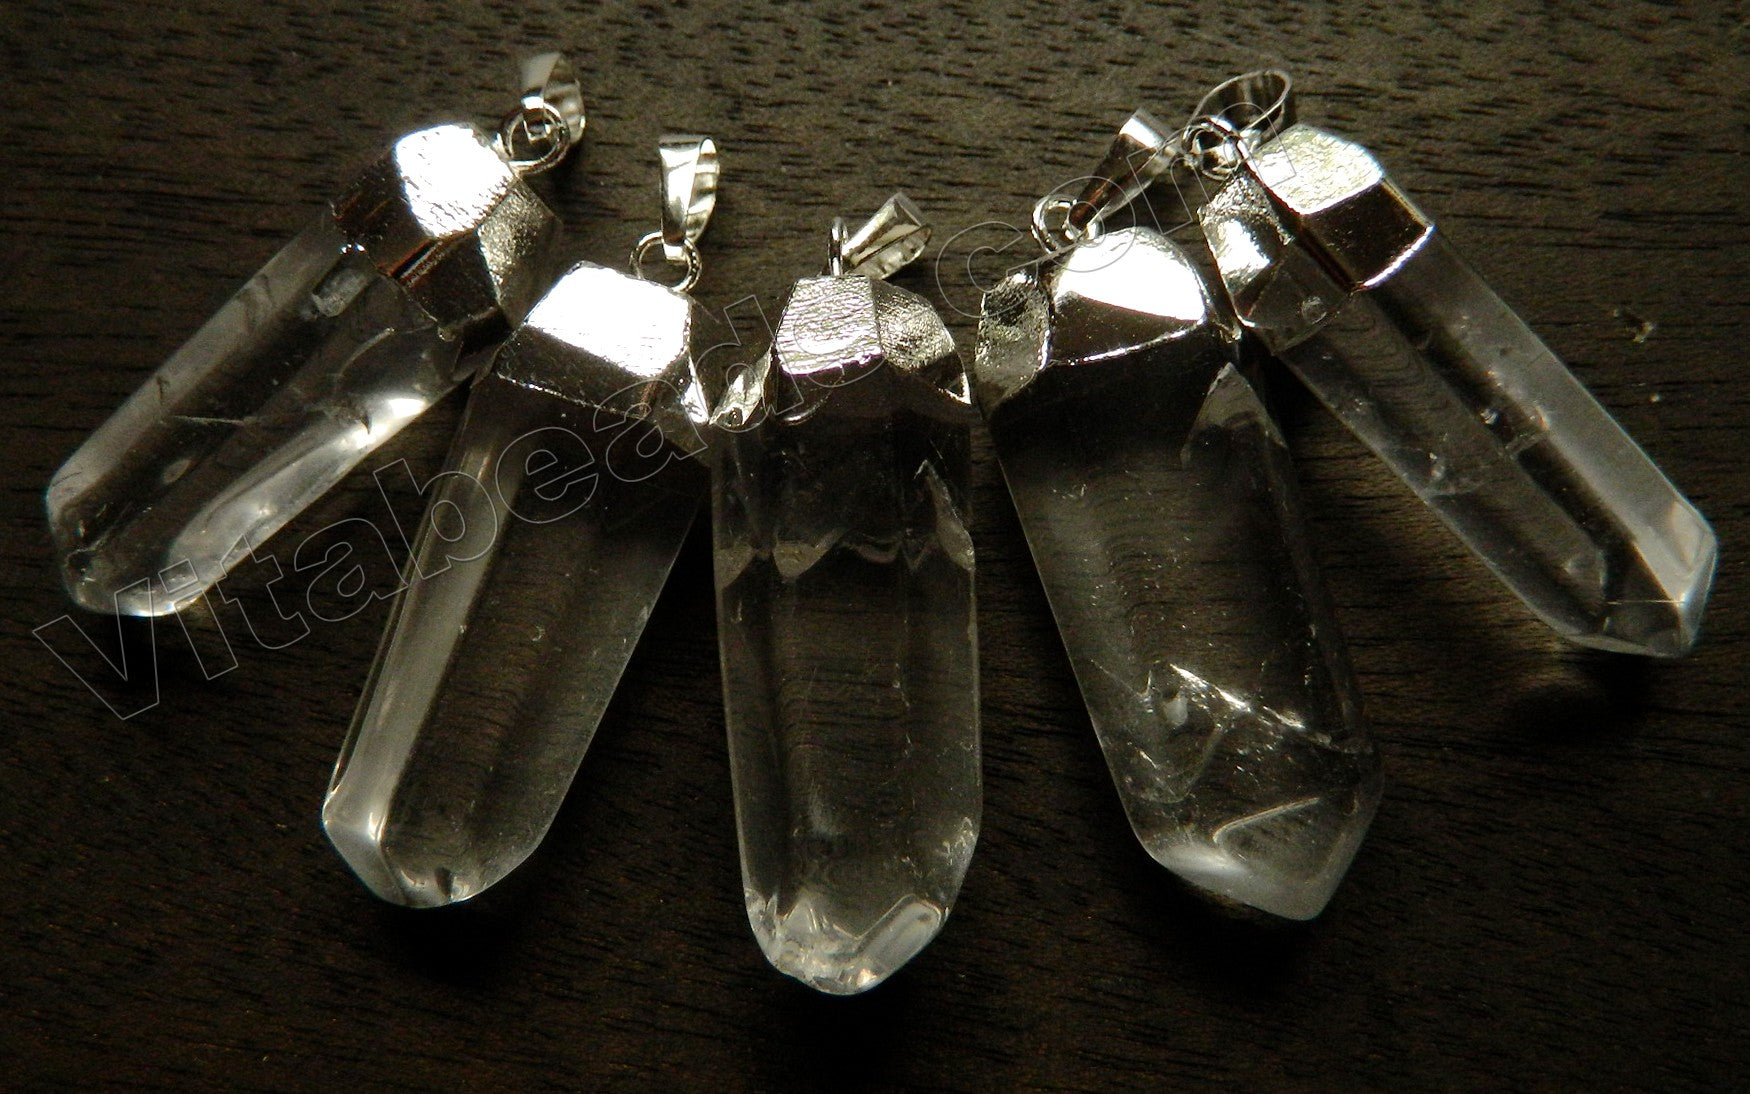 Crystal Natural - Pendulum Pendant w/ Silver Bail